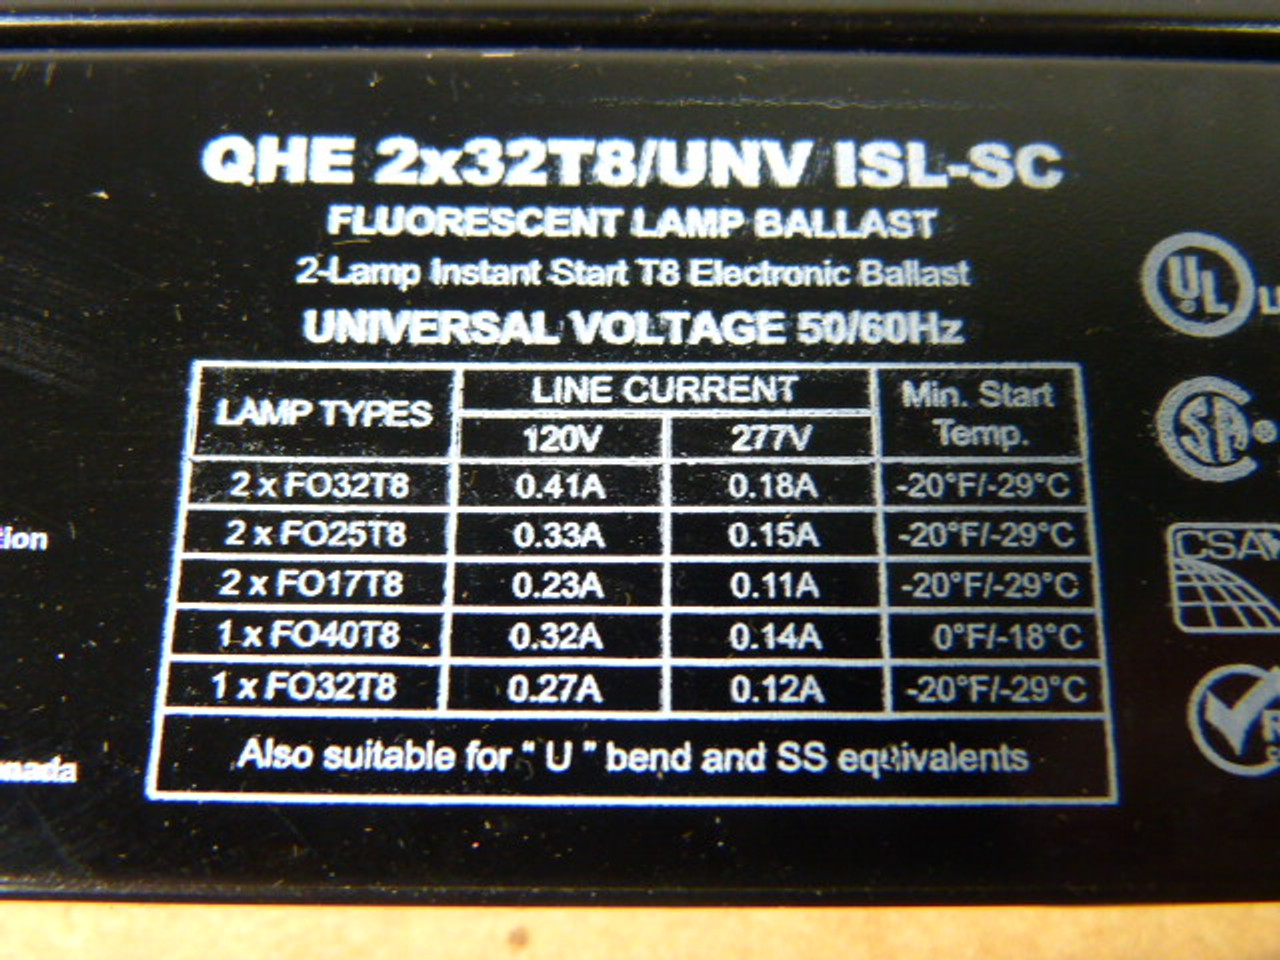 Sylvania QHE2X32T8/UNVISL-SC Ballast for Flourescent Lamp Box of 10pcs ! NEW !